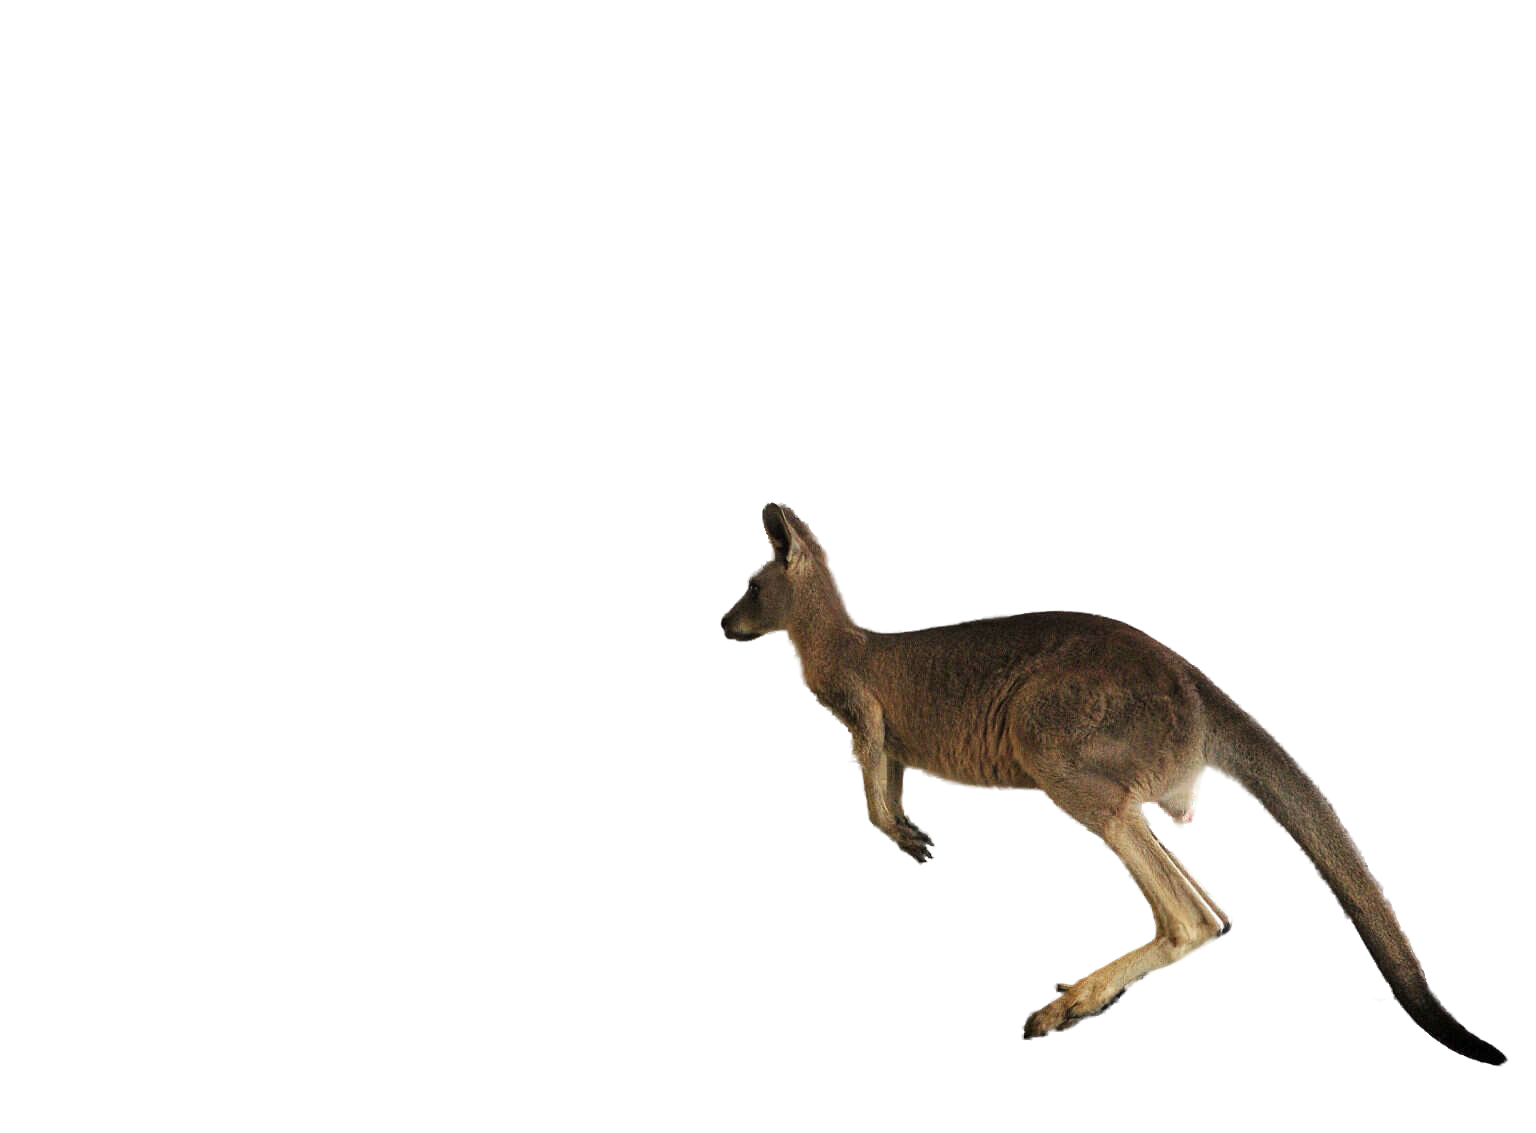 Jumping Kangaroo Clipart